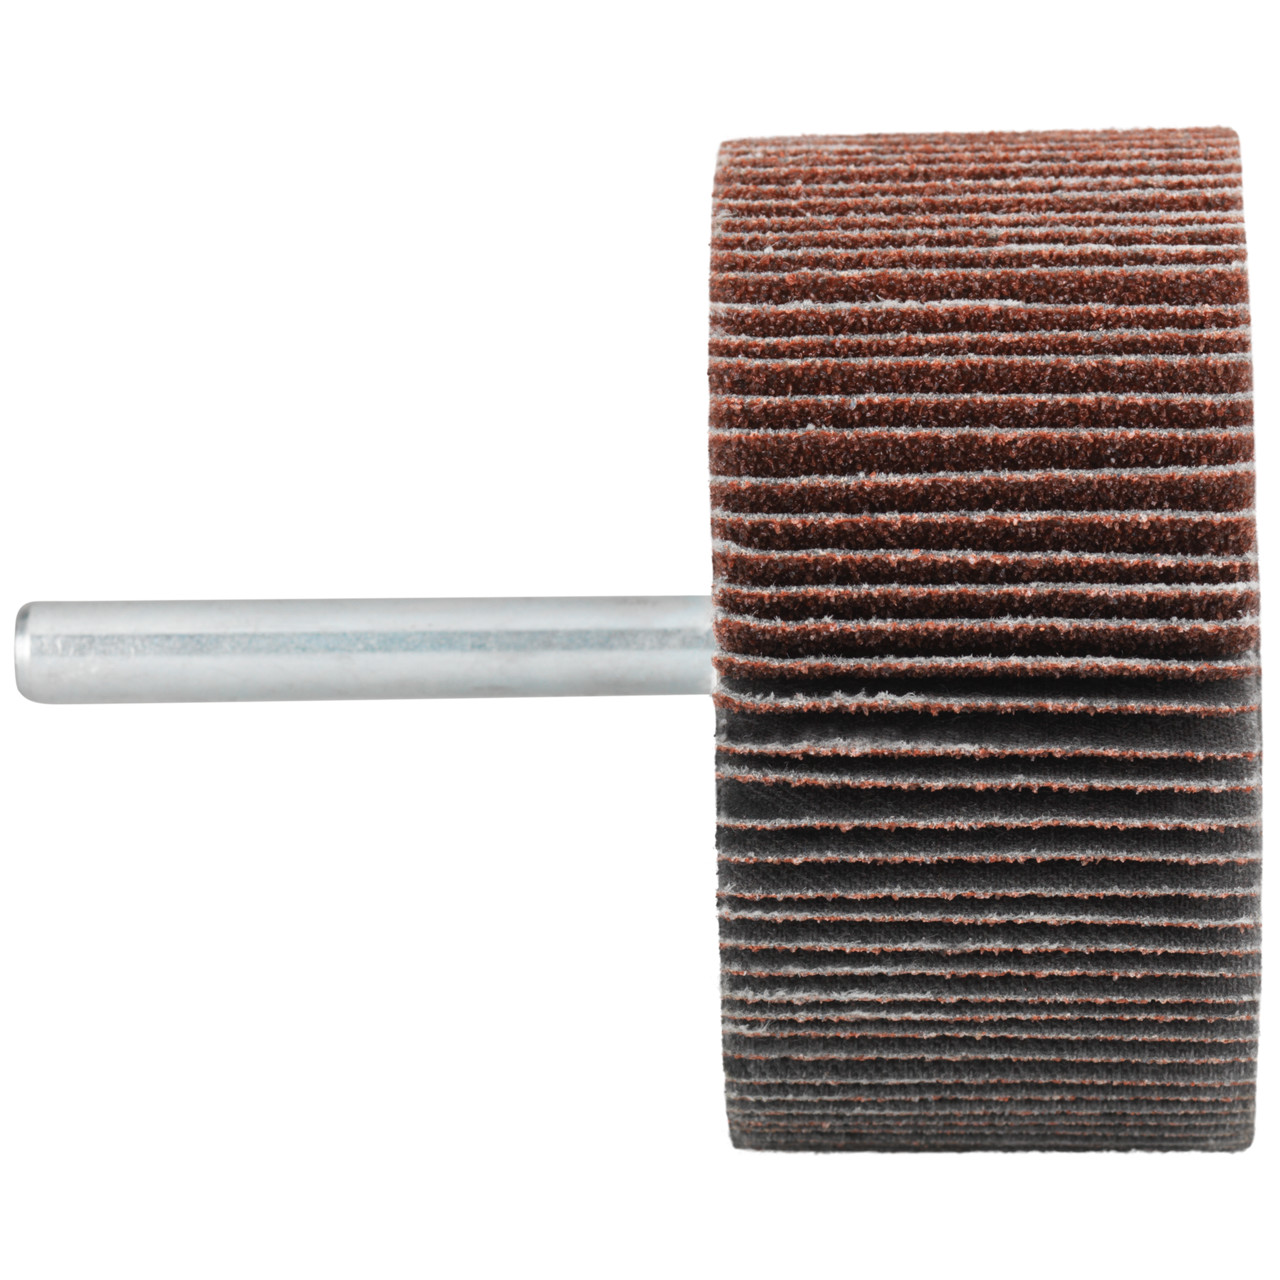 Tyrolit A-P01 C X Perni DxD 60x20 Per acciaio, acciaio inox e metalli non ferrosi, P80, forma: 52LA, Art. 816954